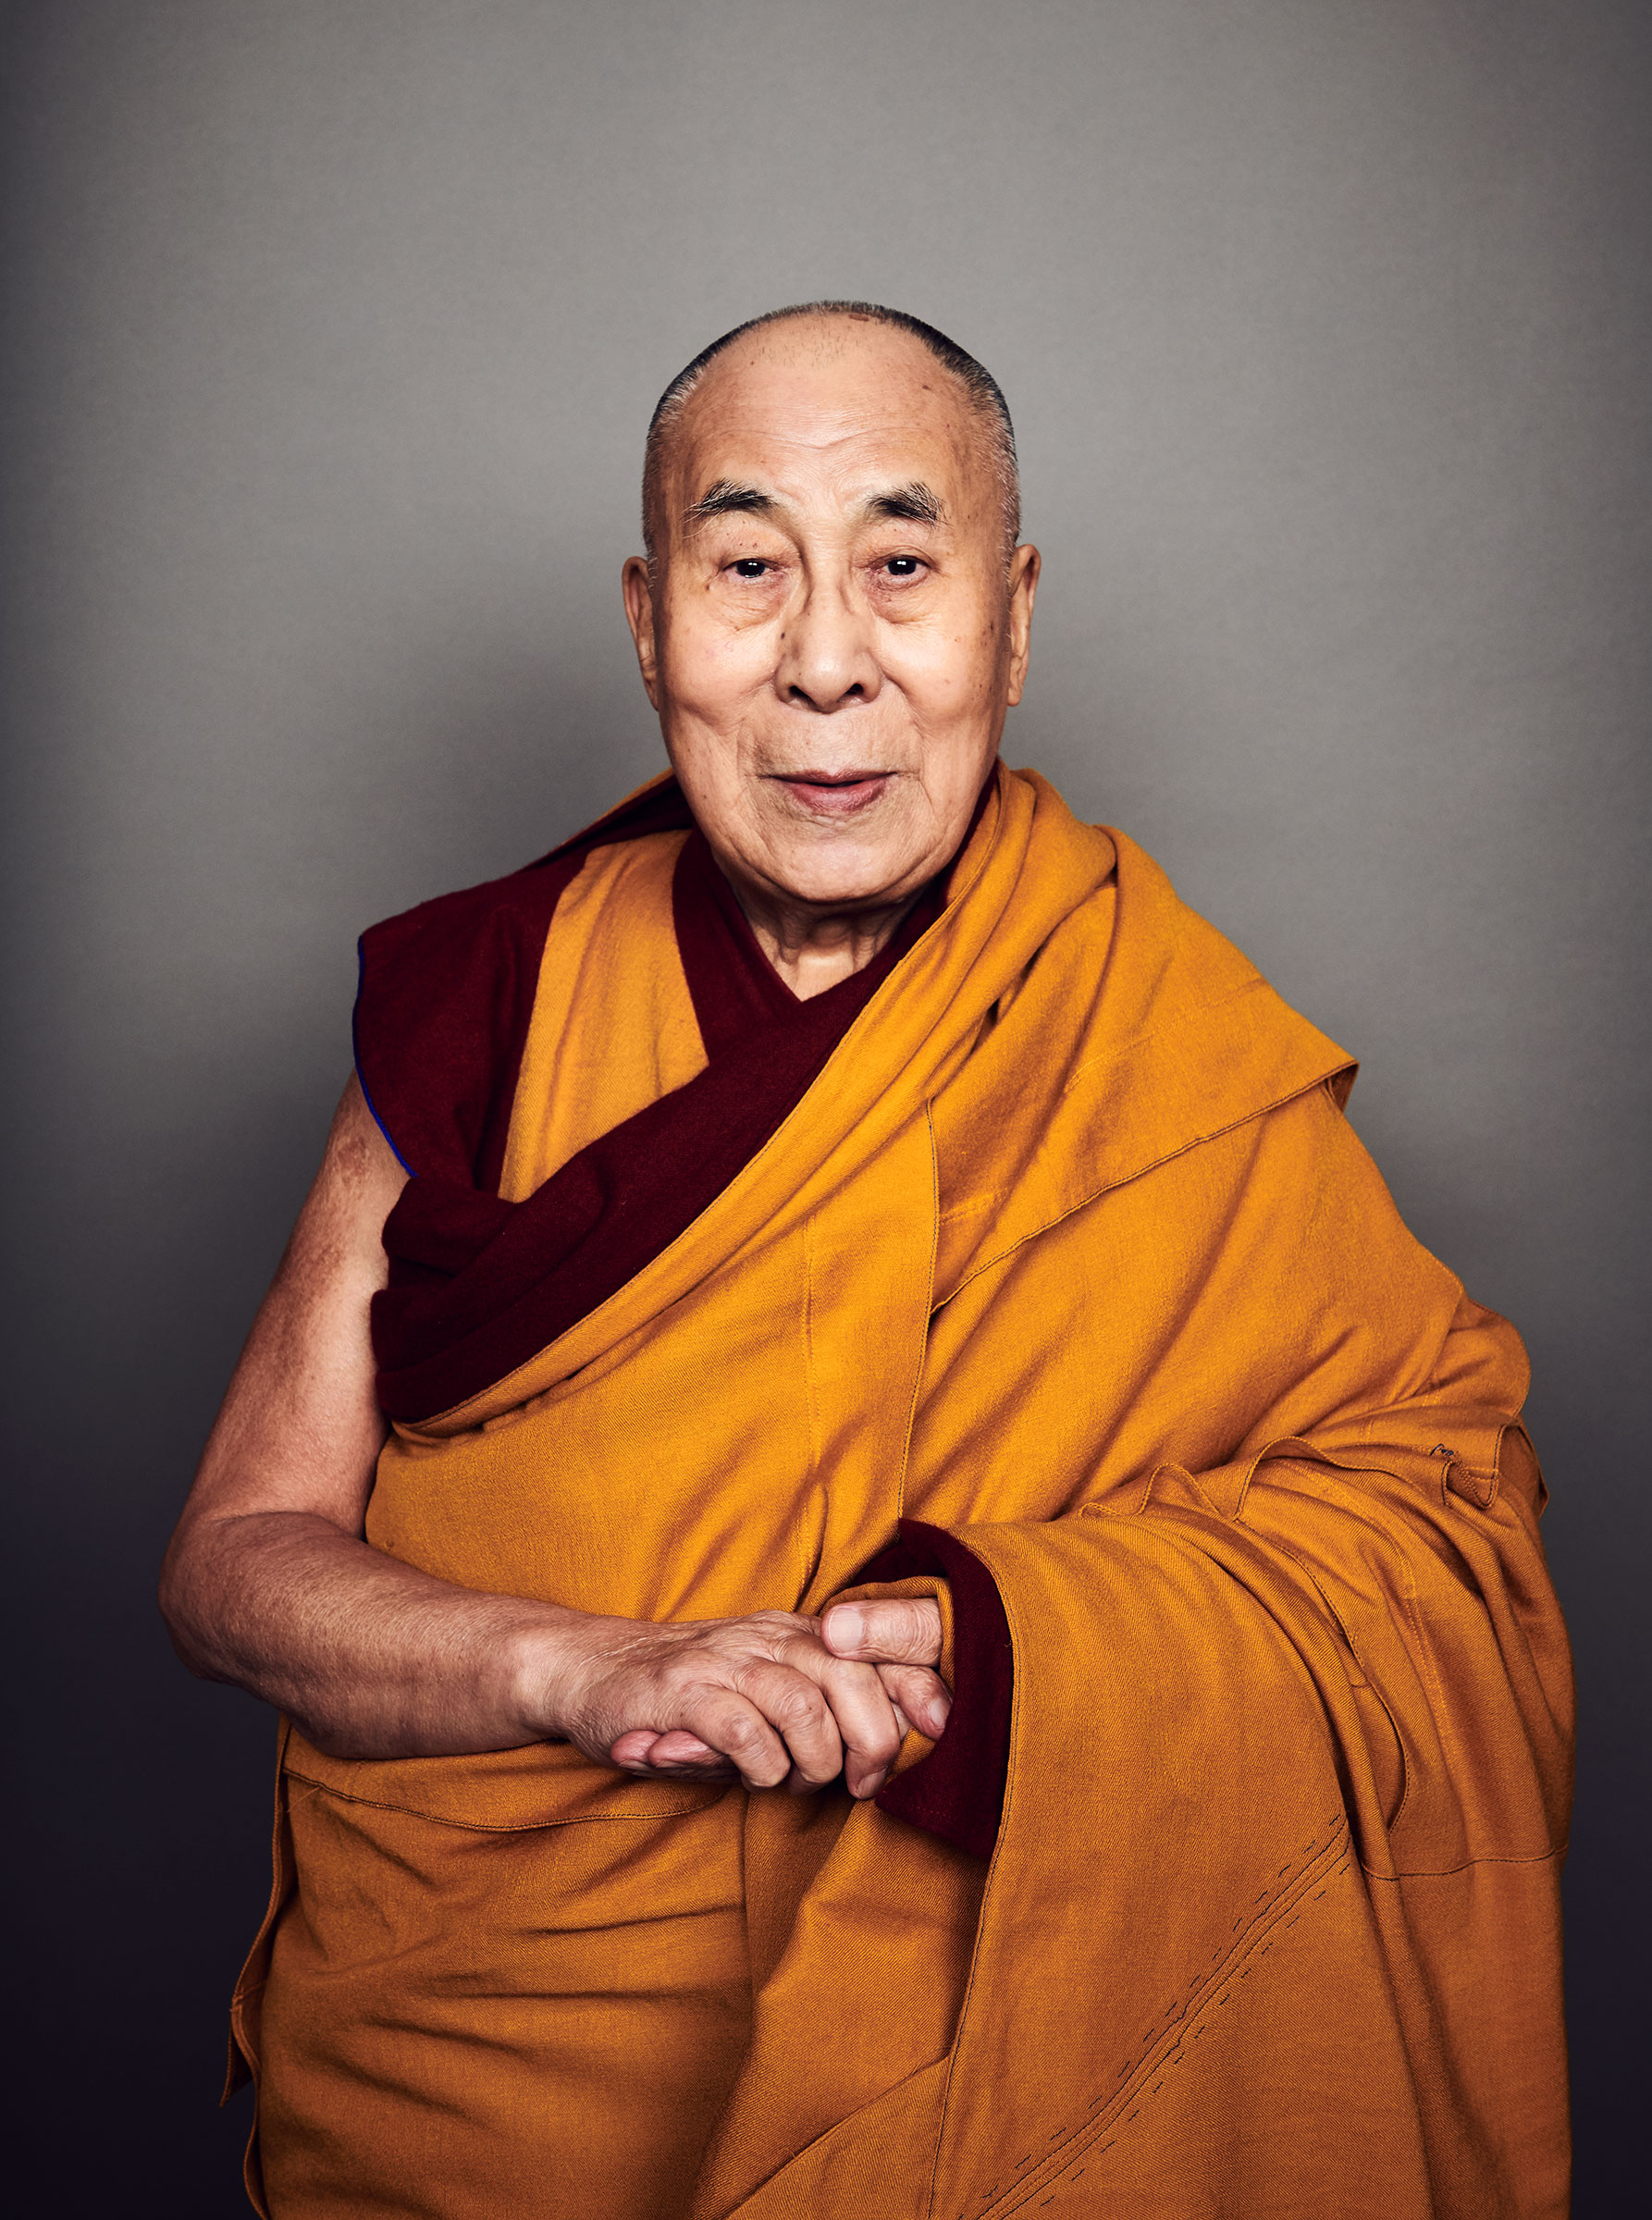 A portrait of the Dalai Lama